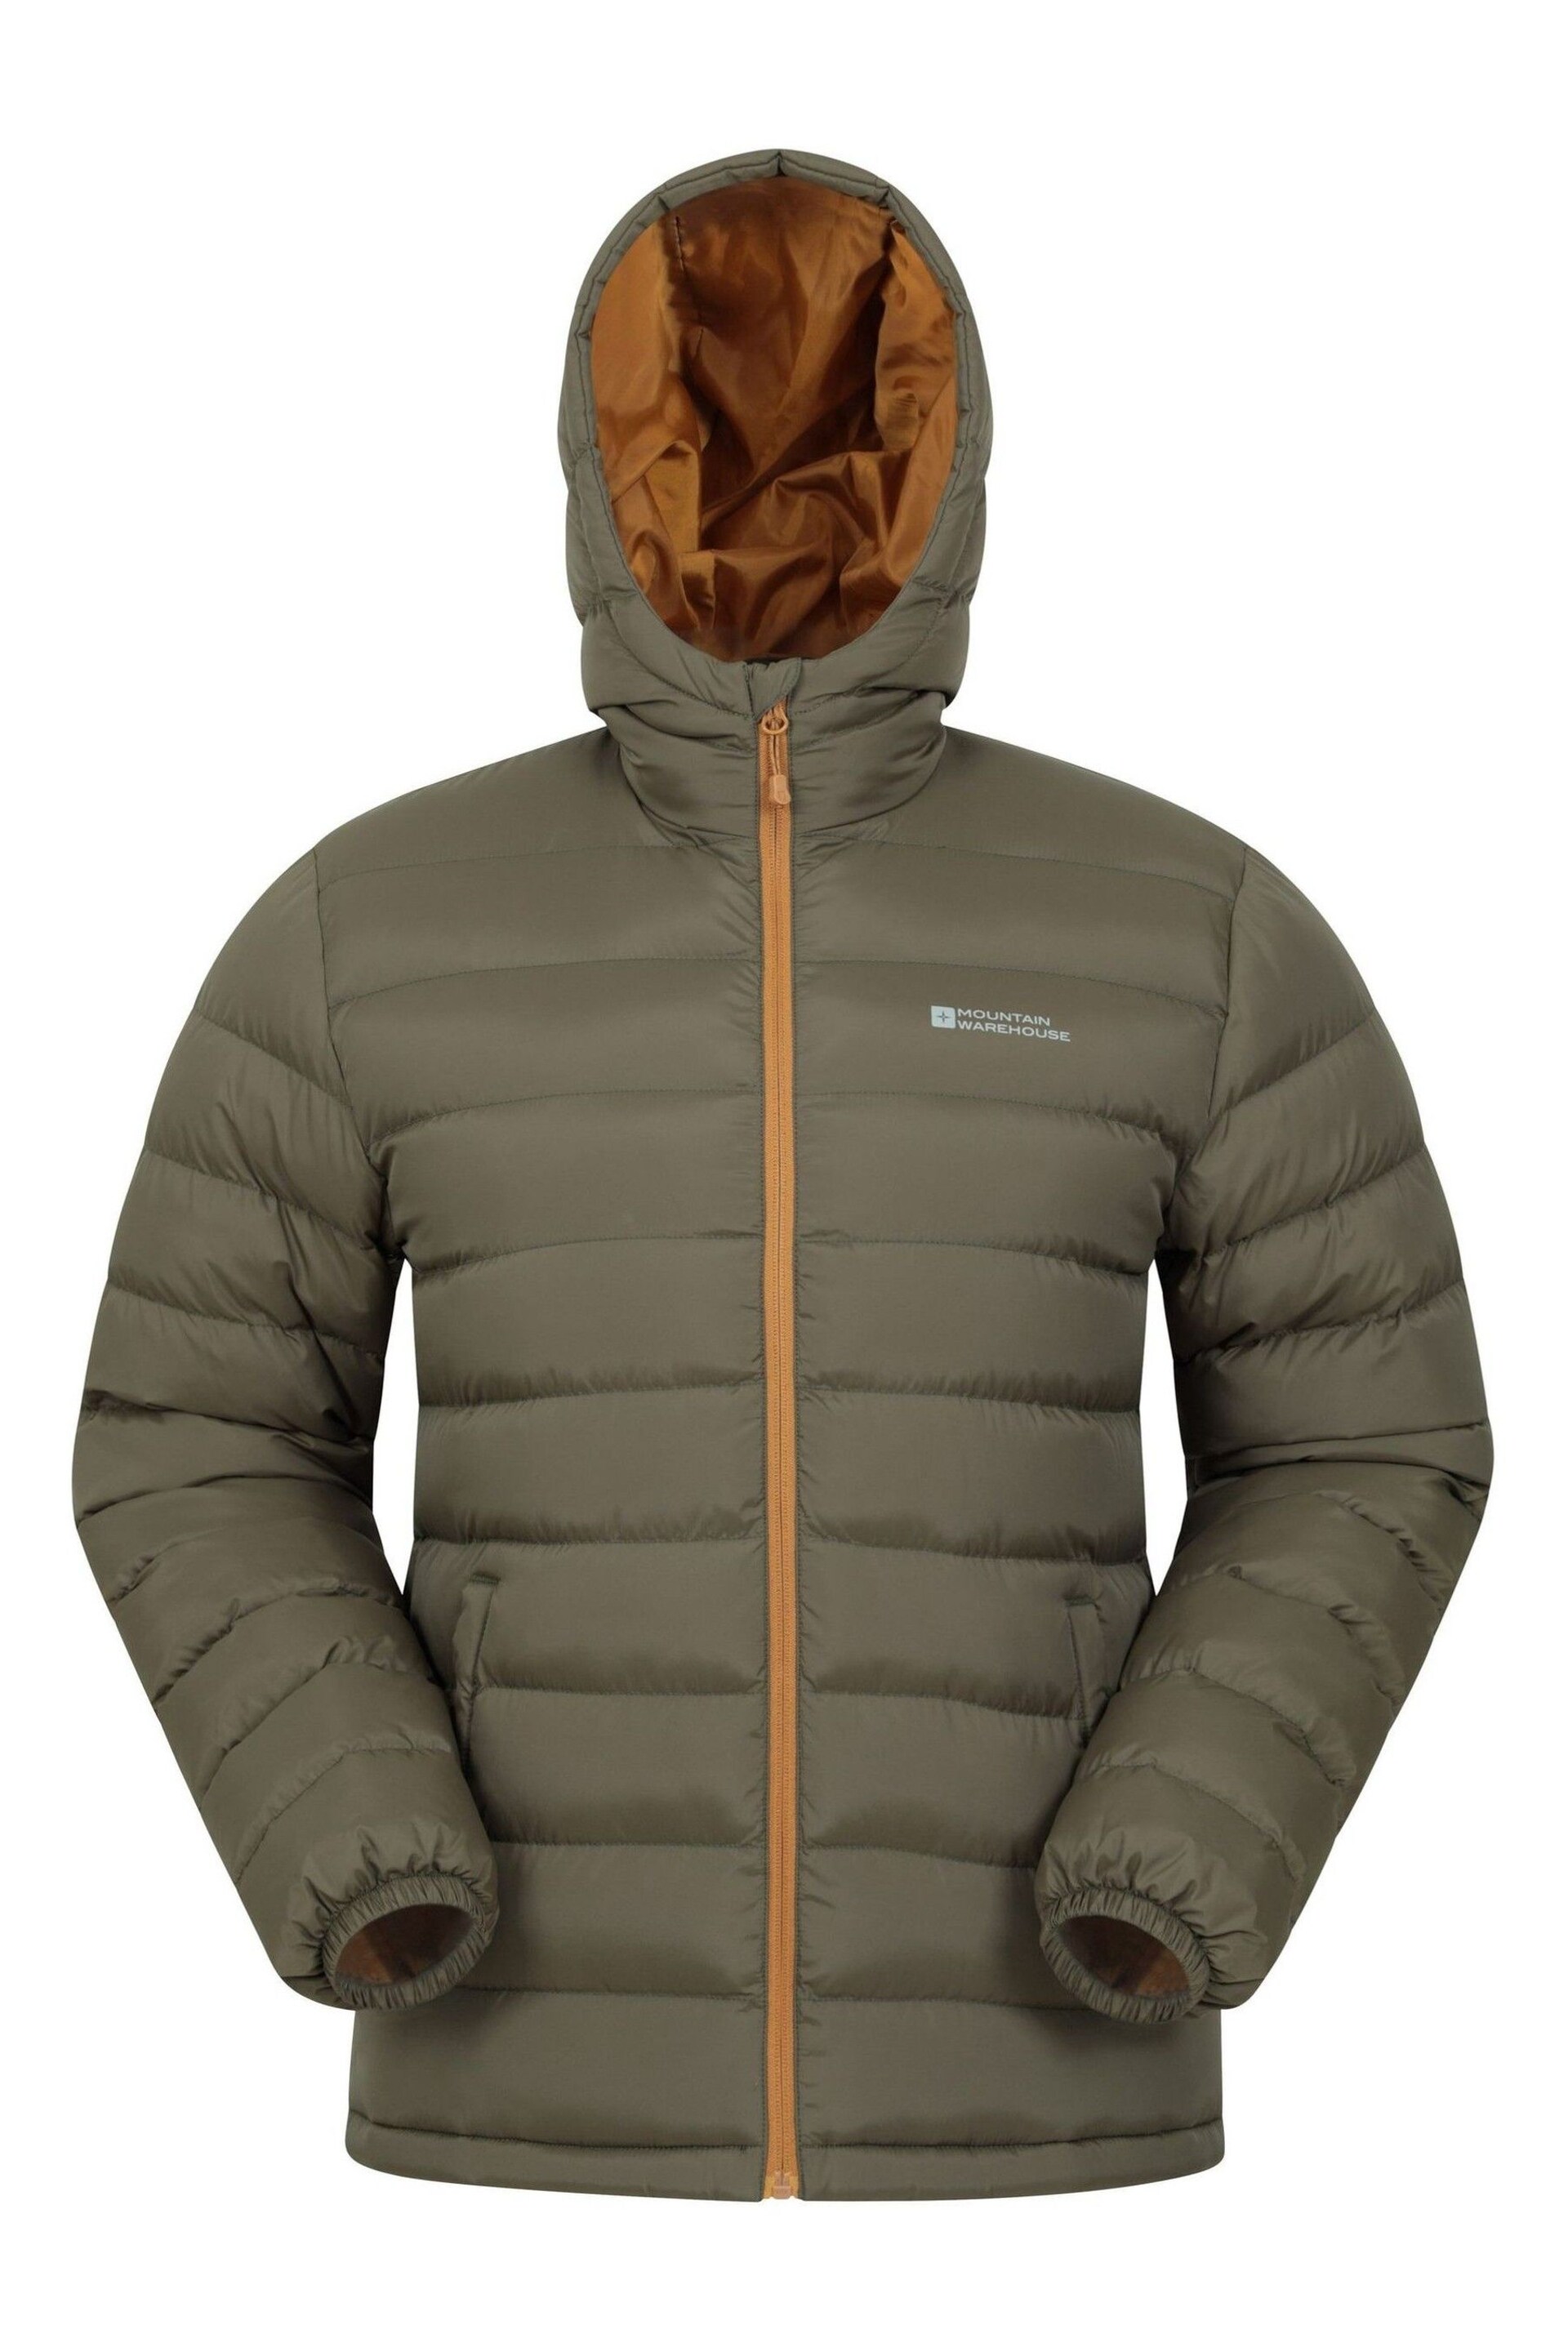 Mountain Warehouse Green Seasons Padded Jacket -  Mens - Image 1 of 5